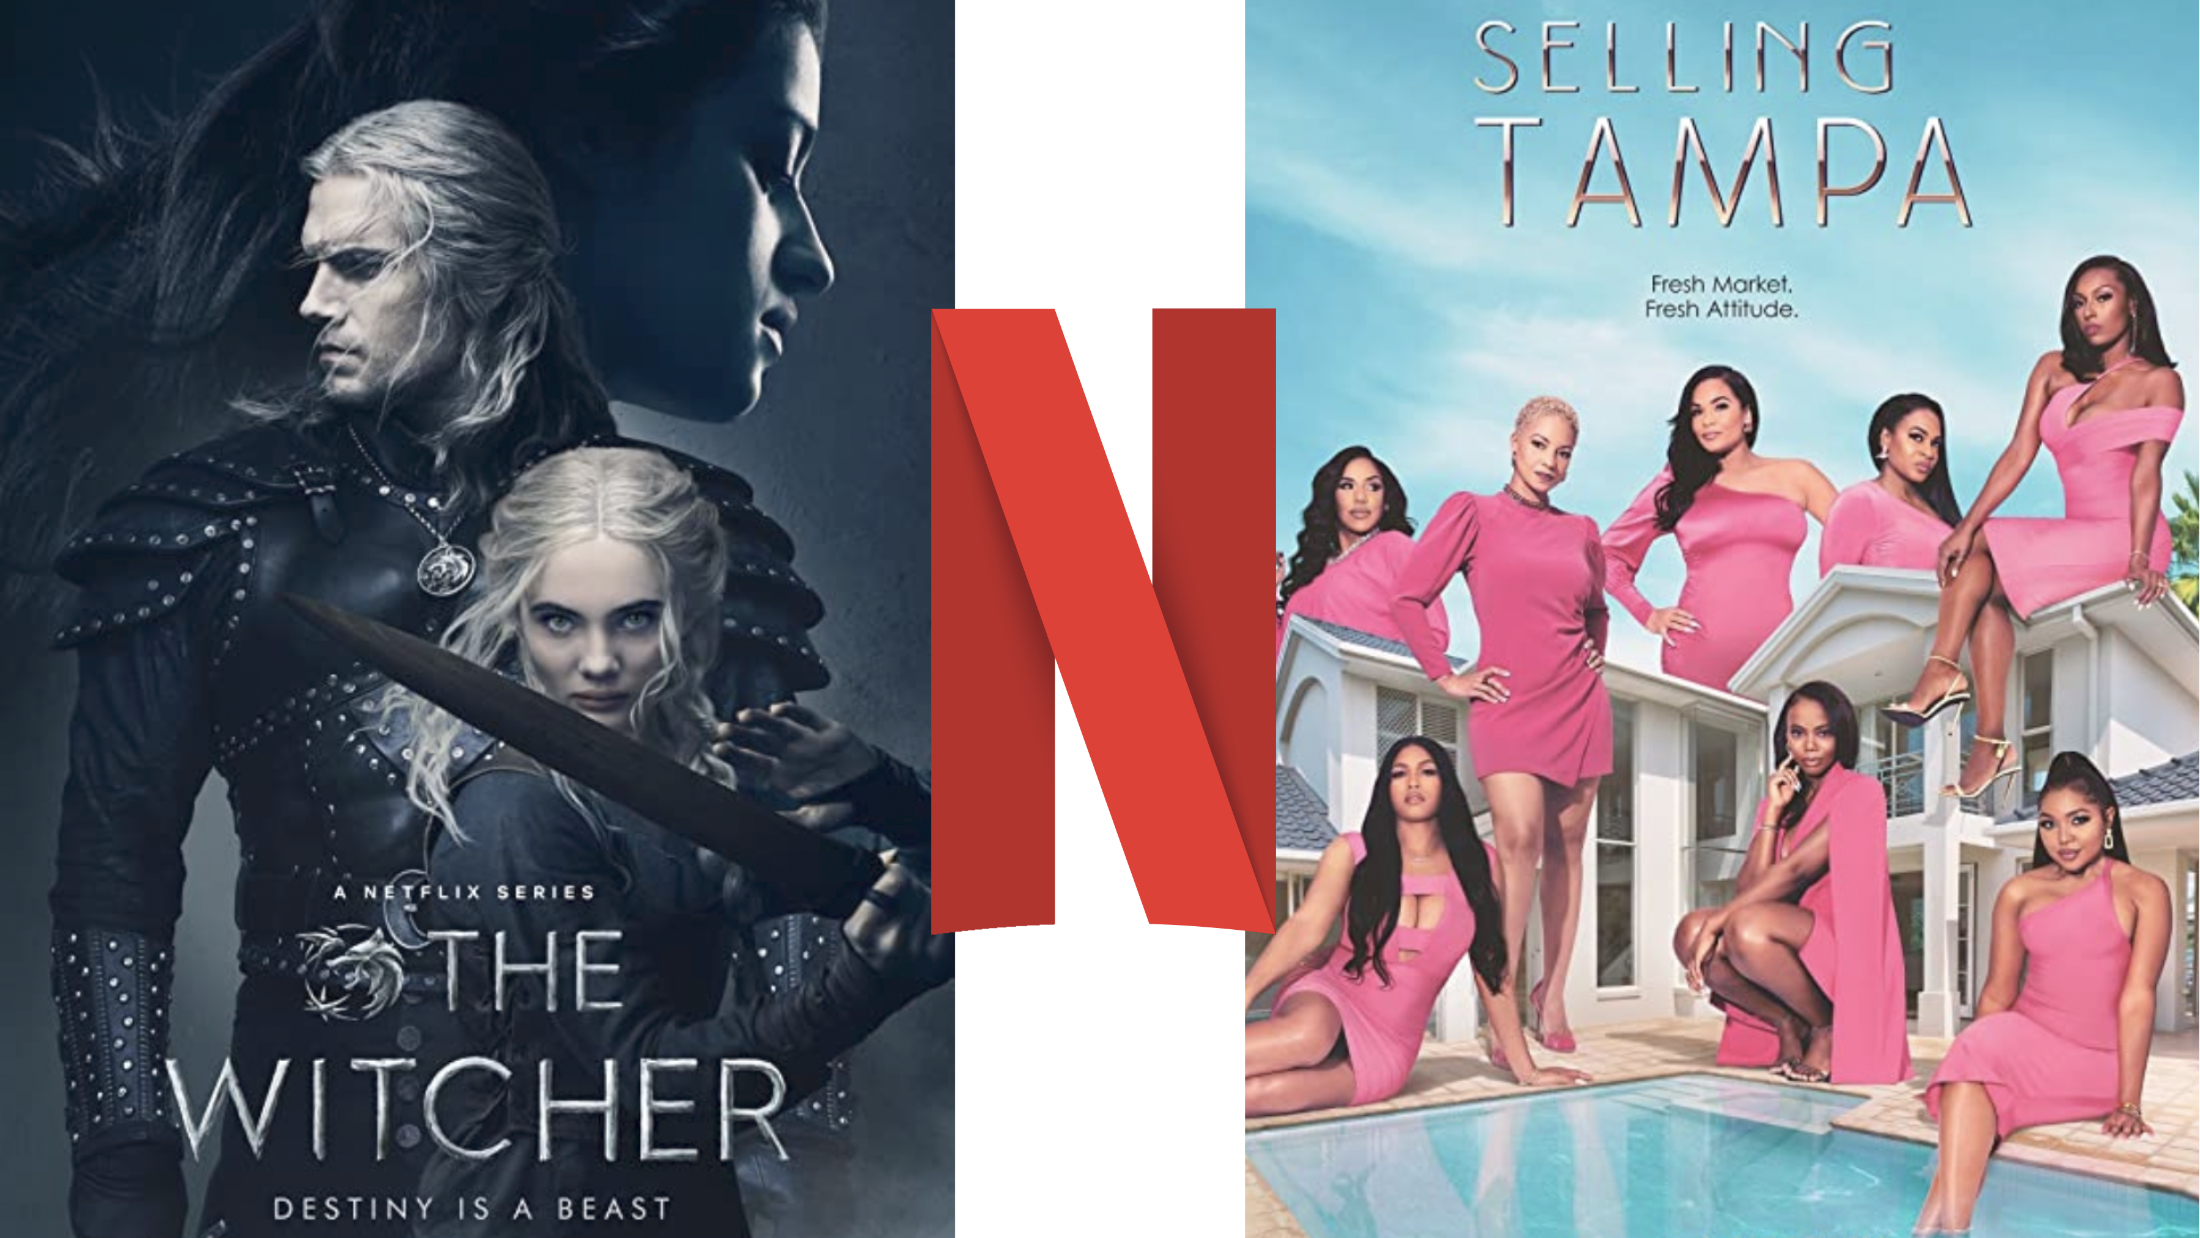 Netflix Canada News of the Week [17 décembre]

